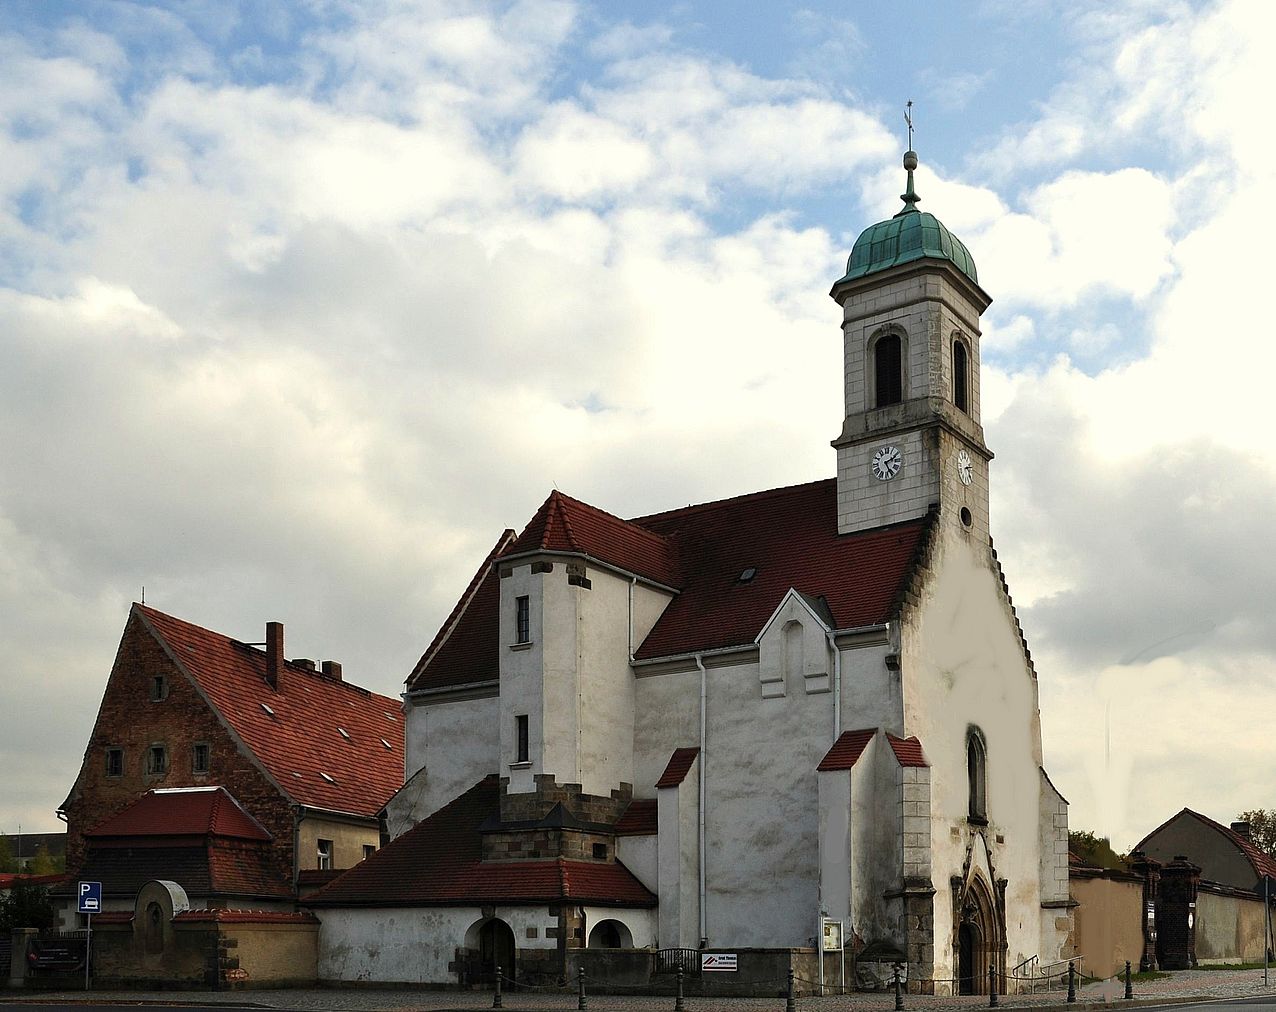 Hospitalkirche Zittau